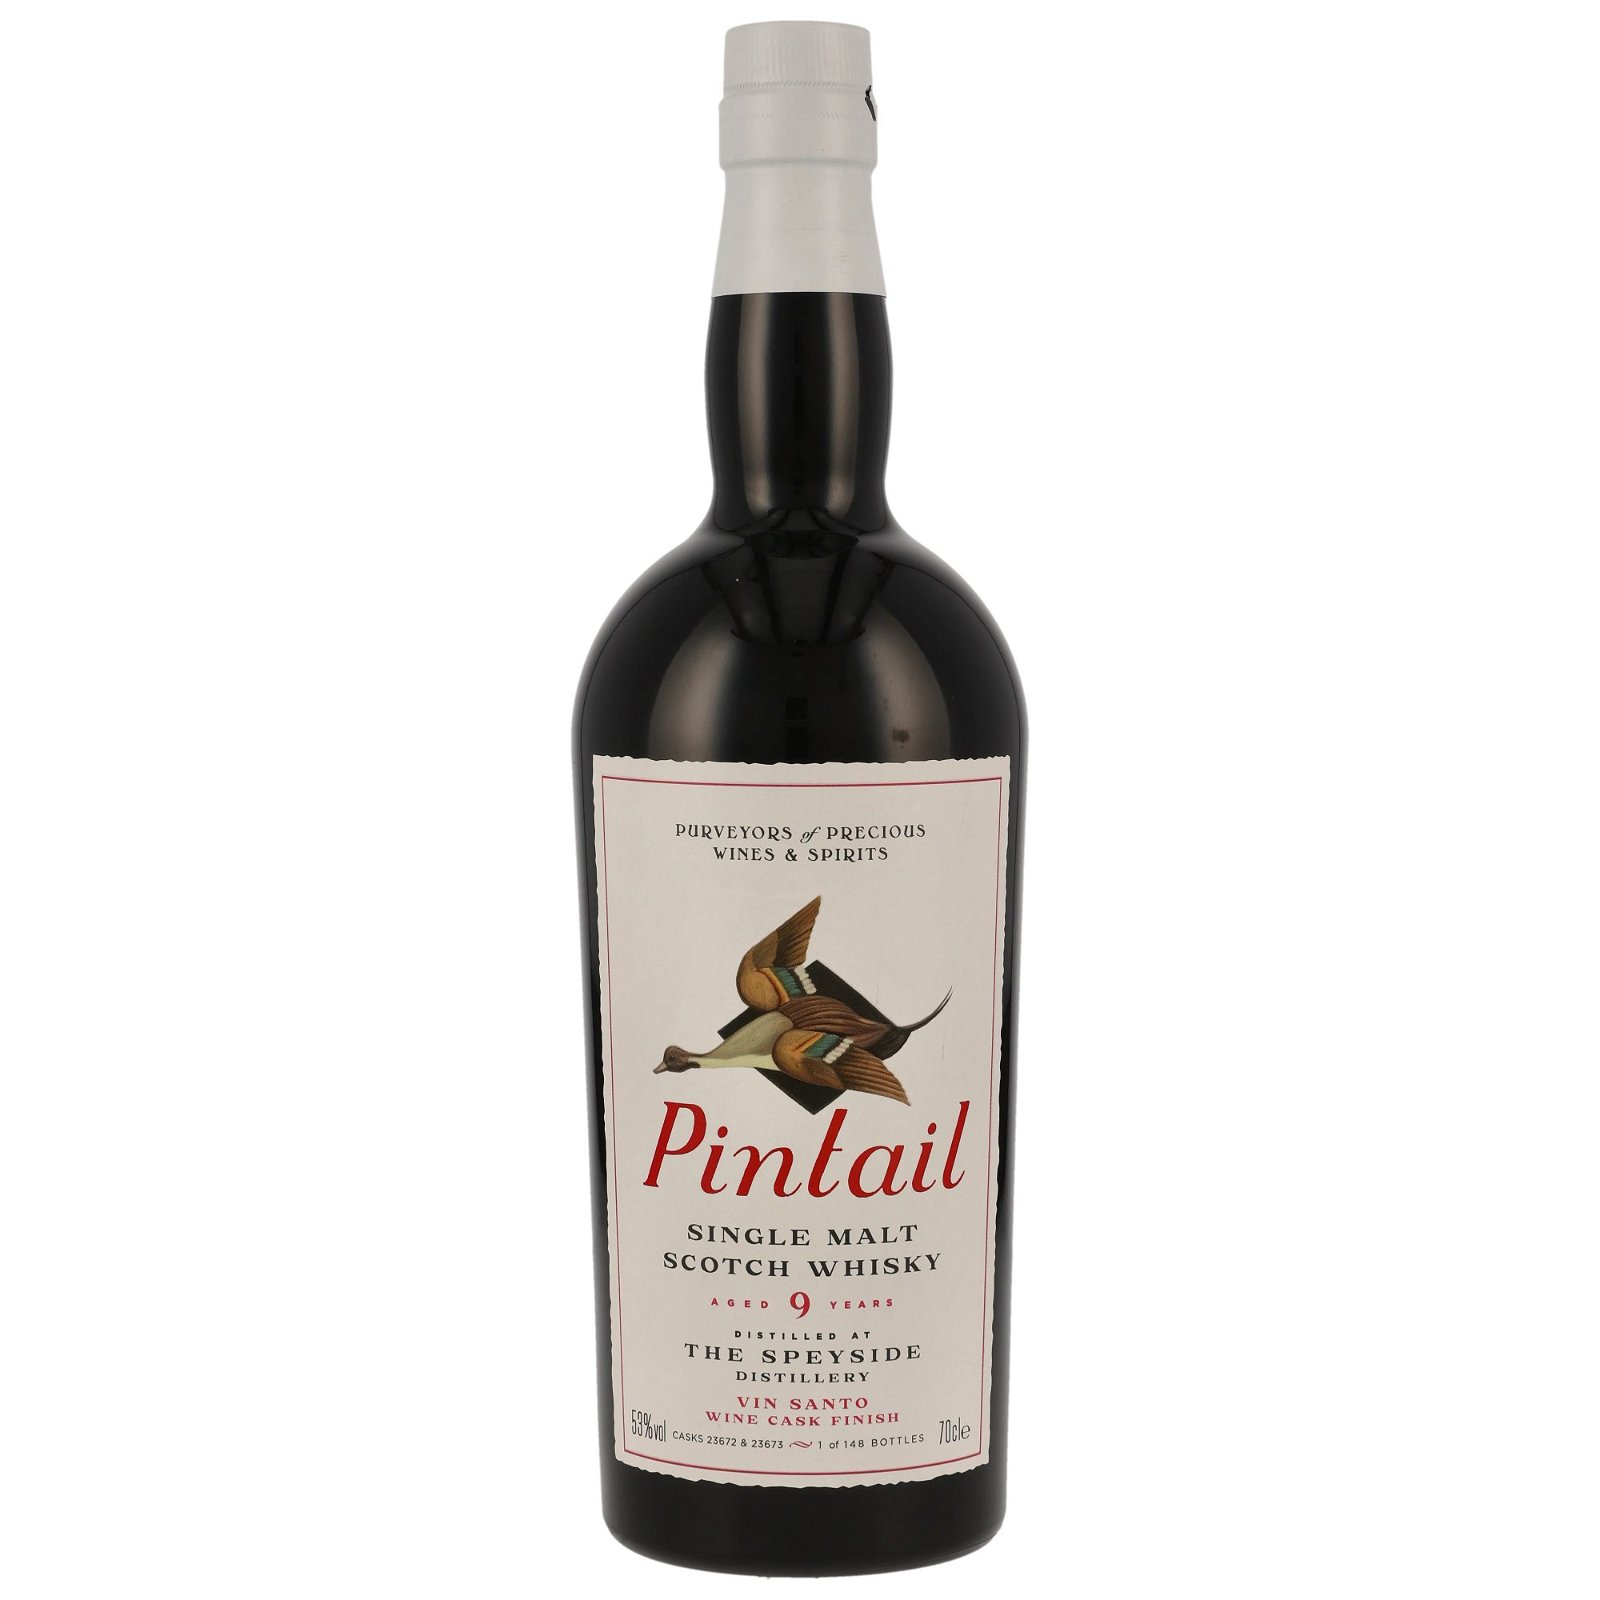 Speyside 2014 - 9 Jahre Vín Santo Wine Cask Finish Octave No. 23672+23673 Pintail (The Whisky Cellar)